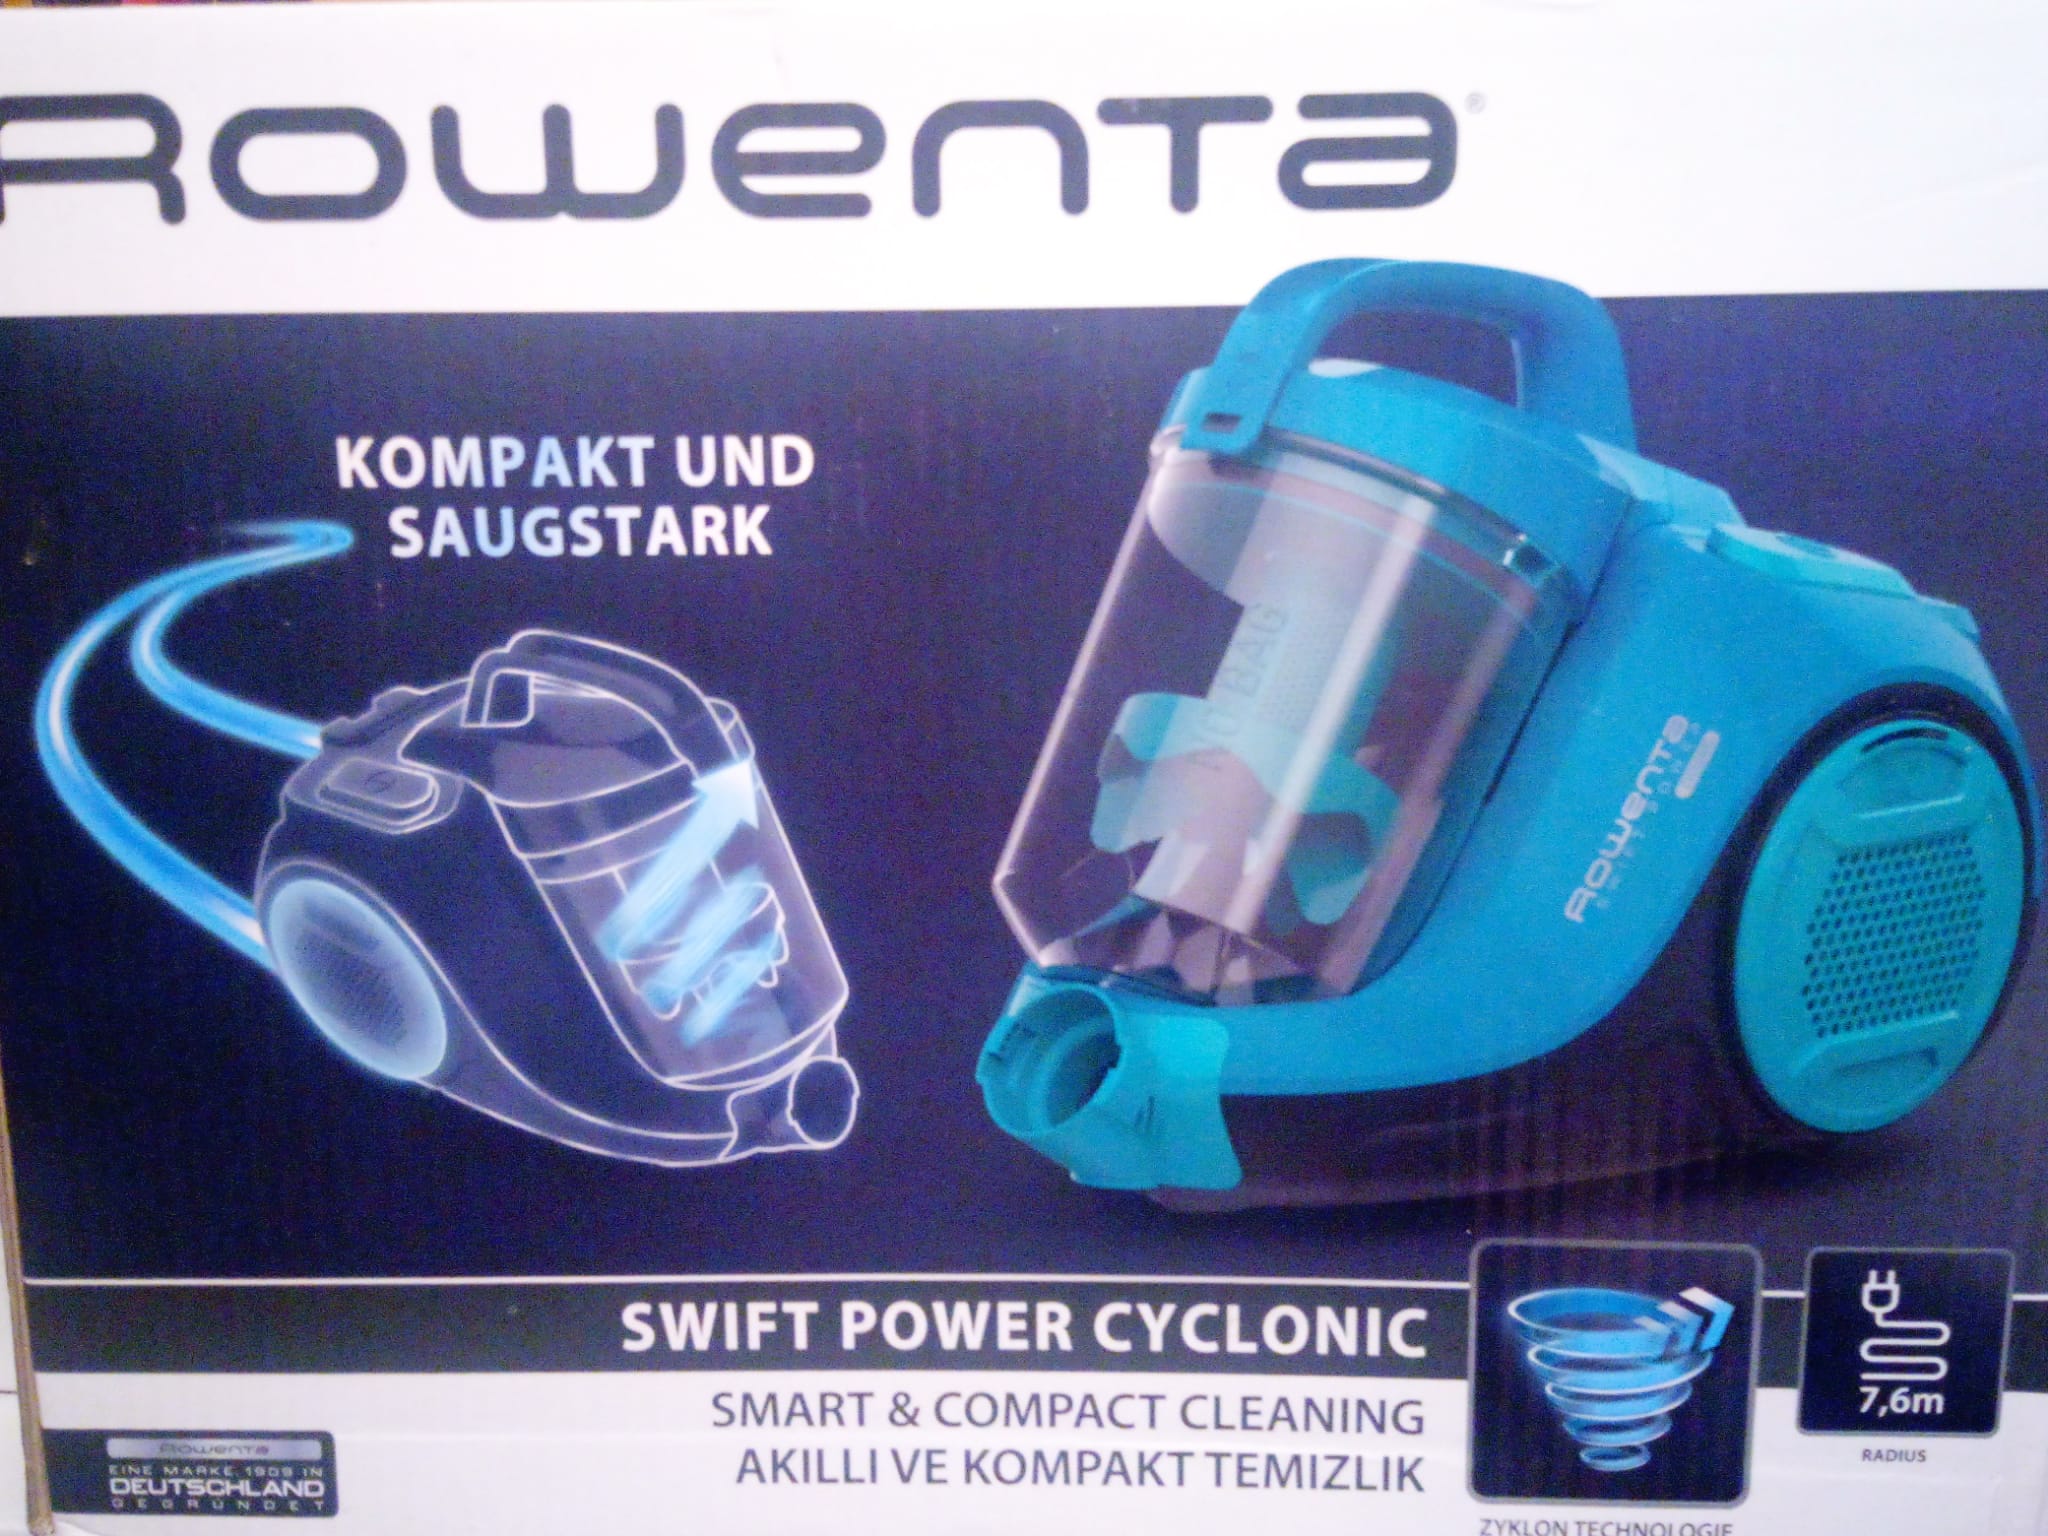 Rowenta SWIFT POWER CYCLONIC